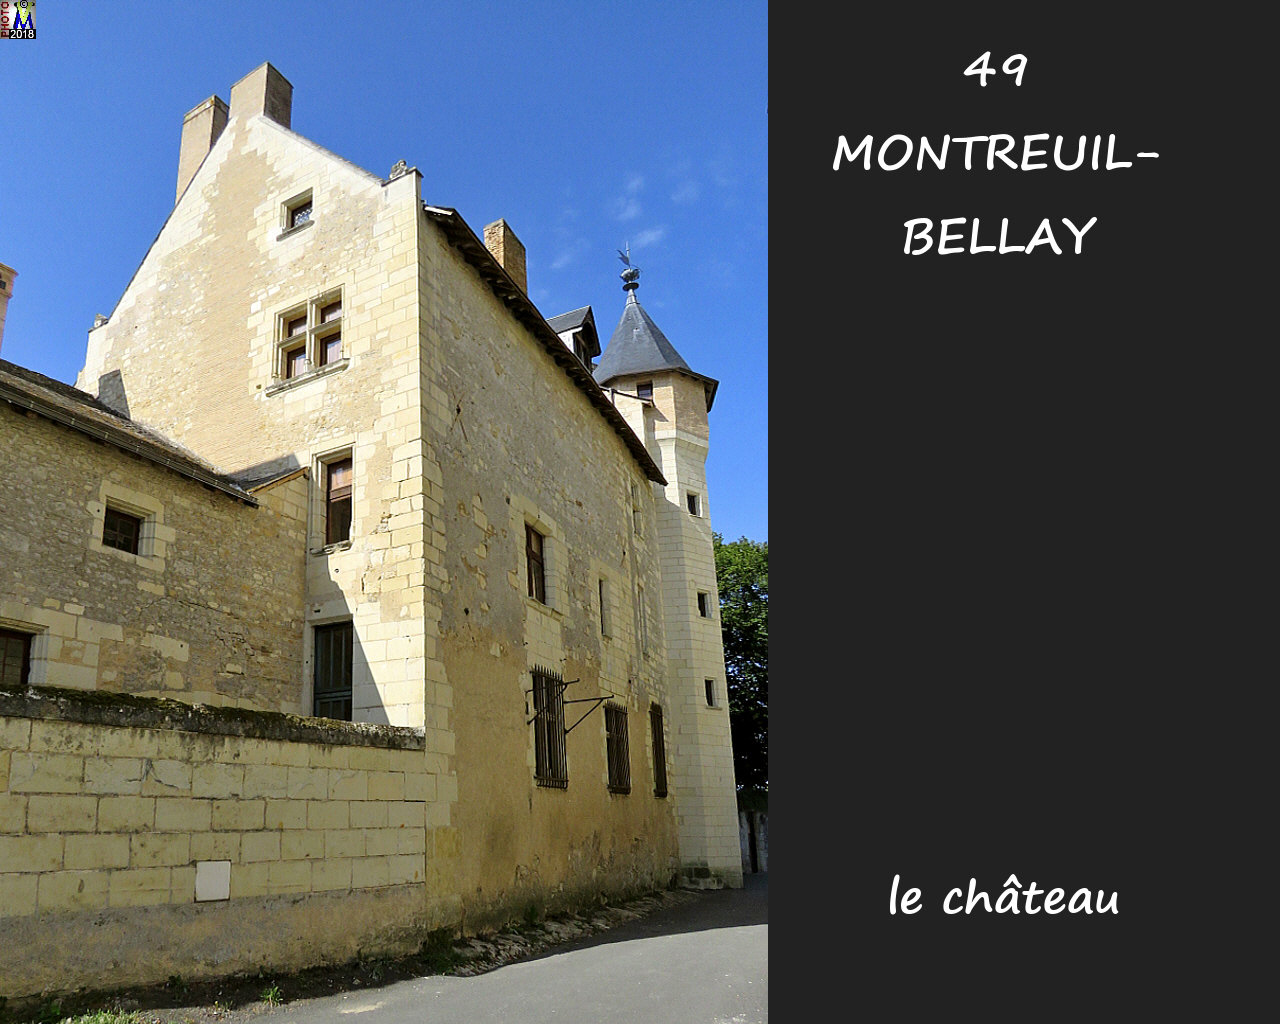 49MONTREUIL-BELLAY_chateau_1032.jpg